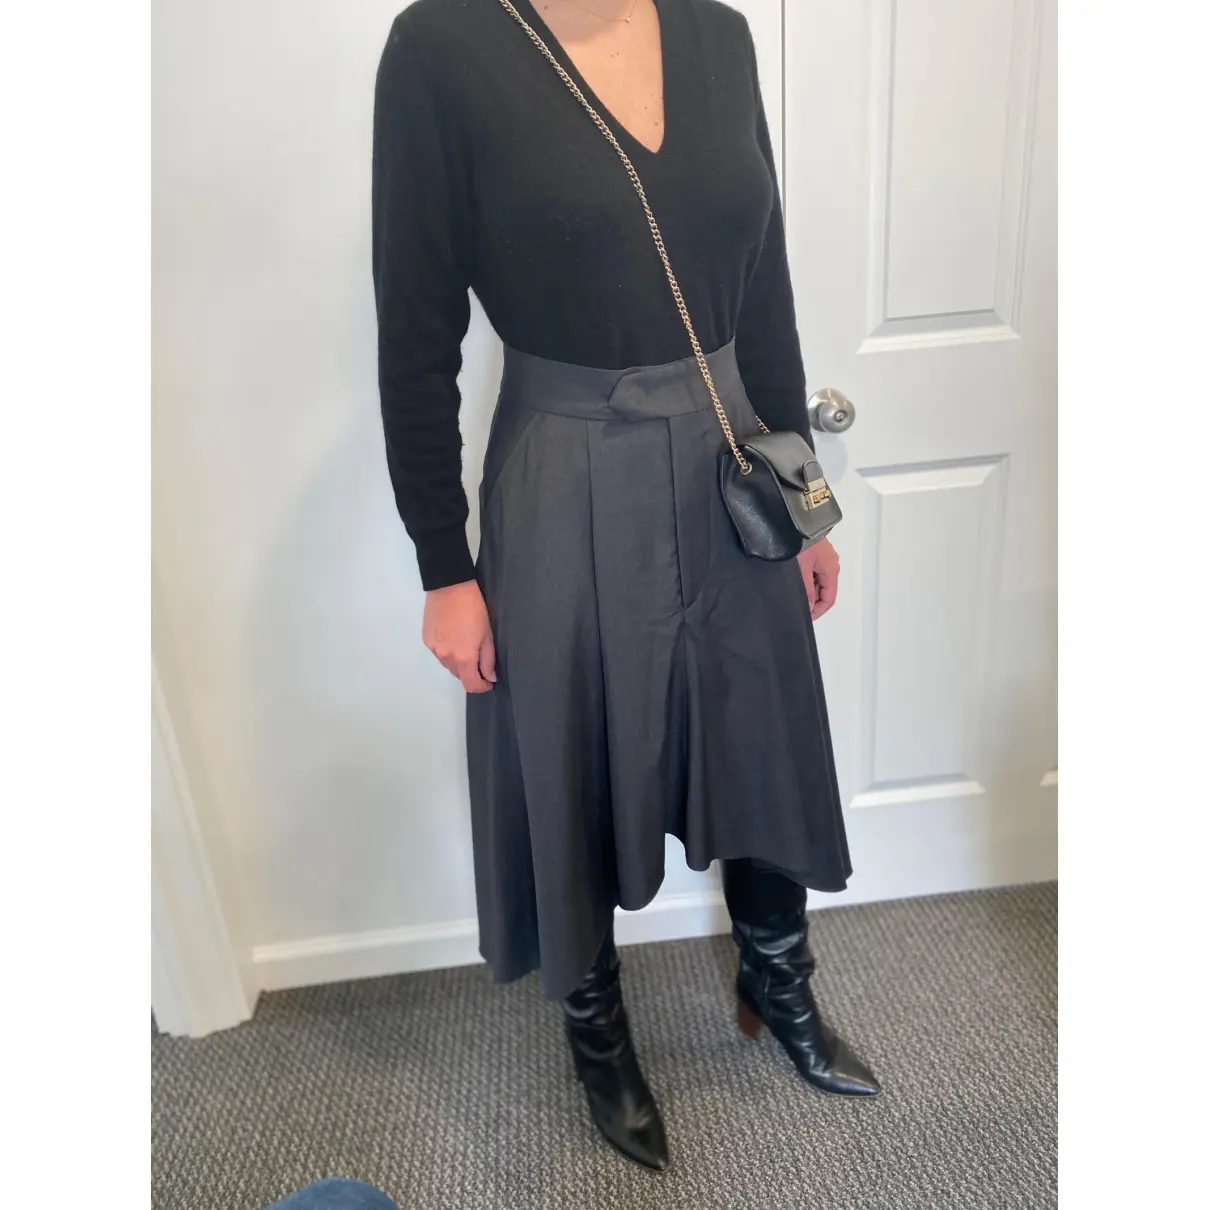 Isabel Marant Wool mid-length skirt for sale